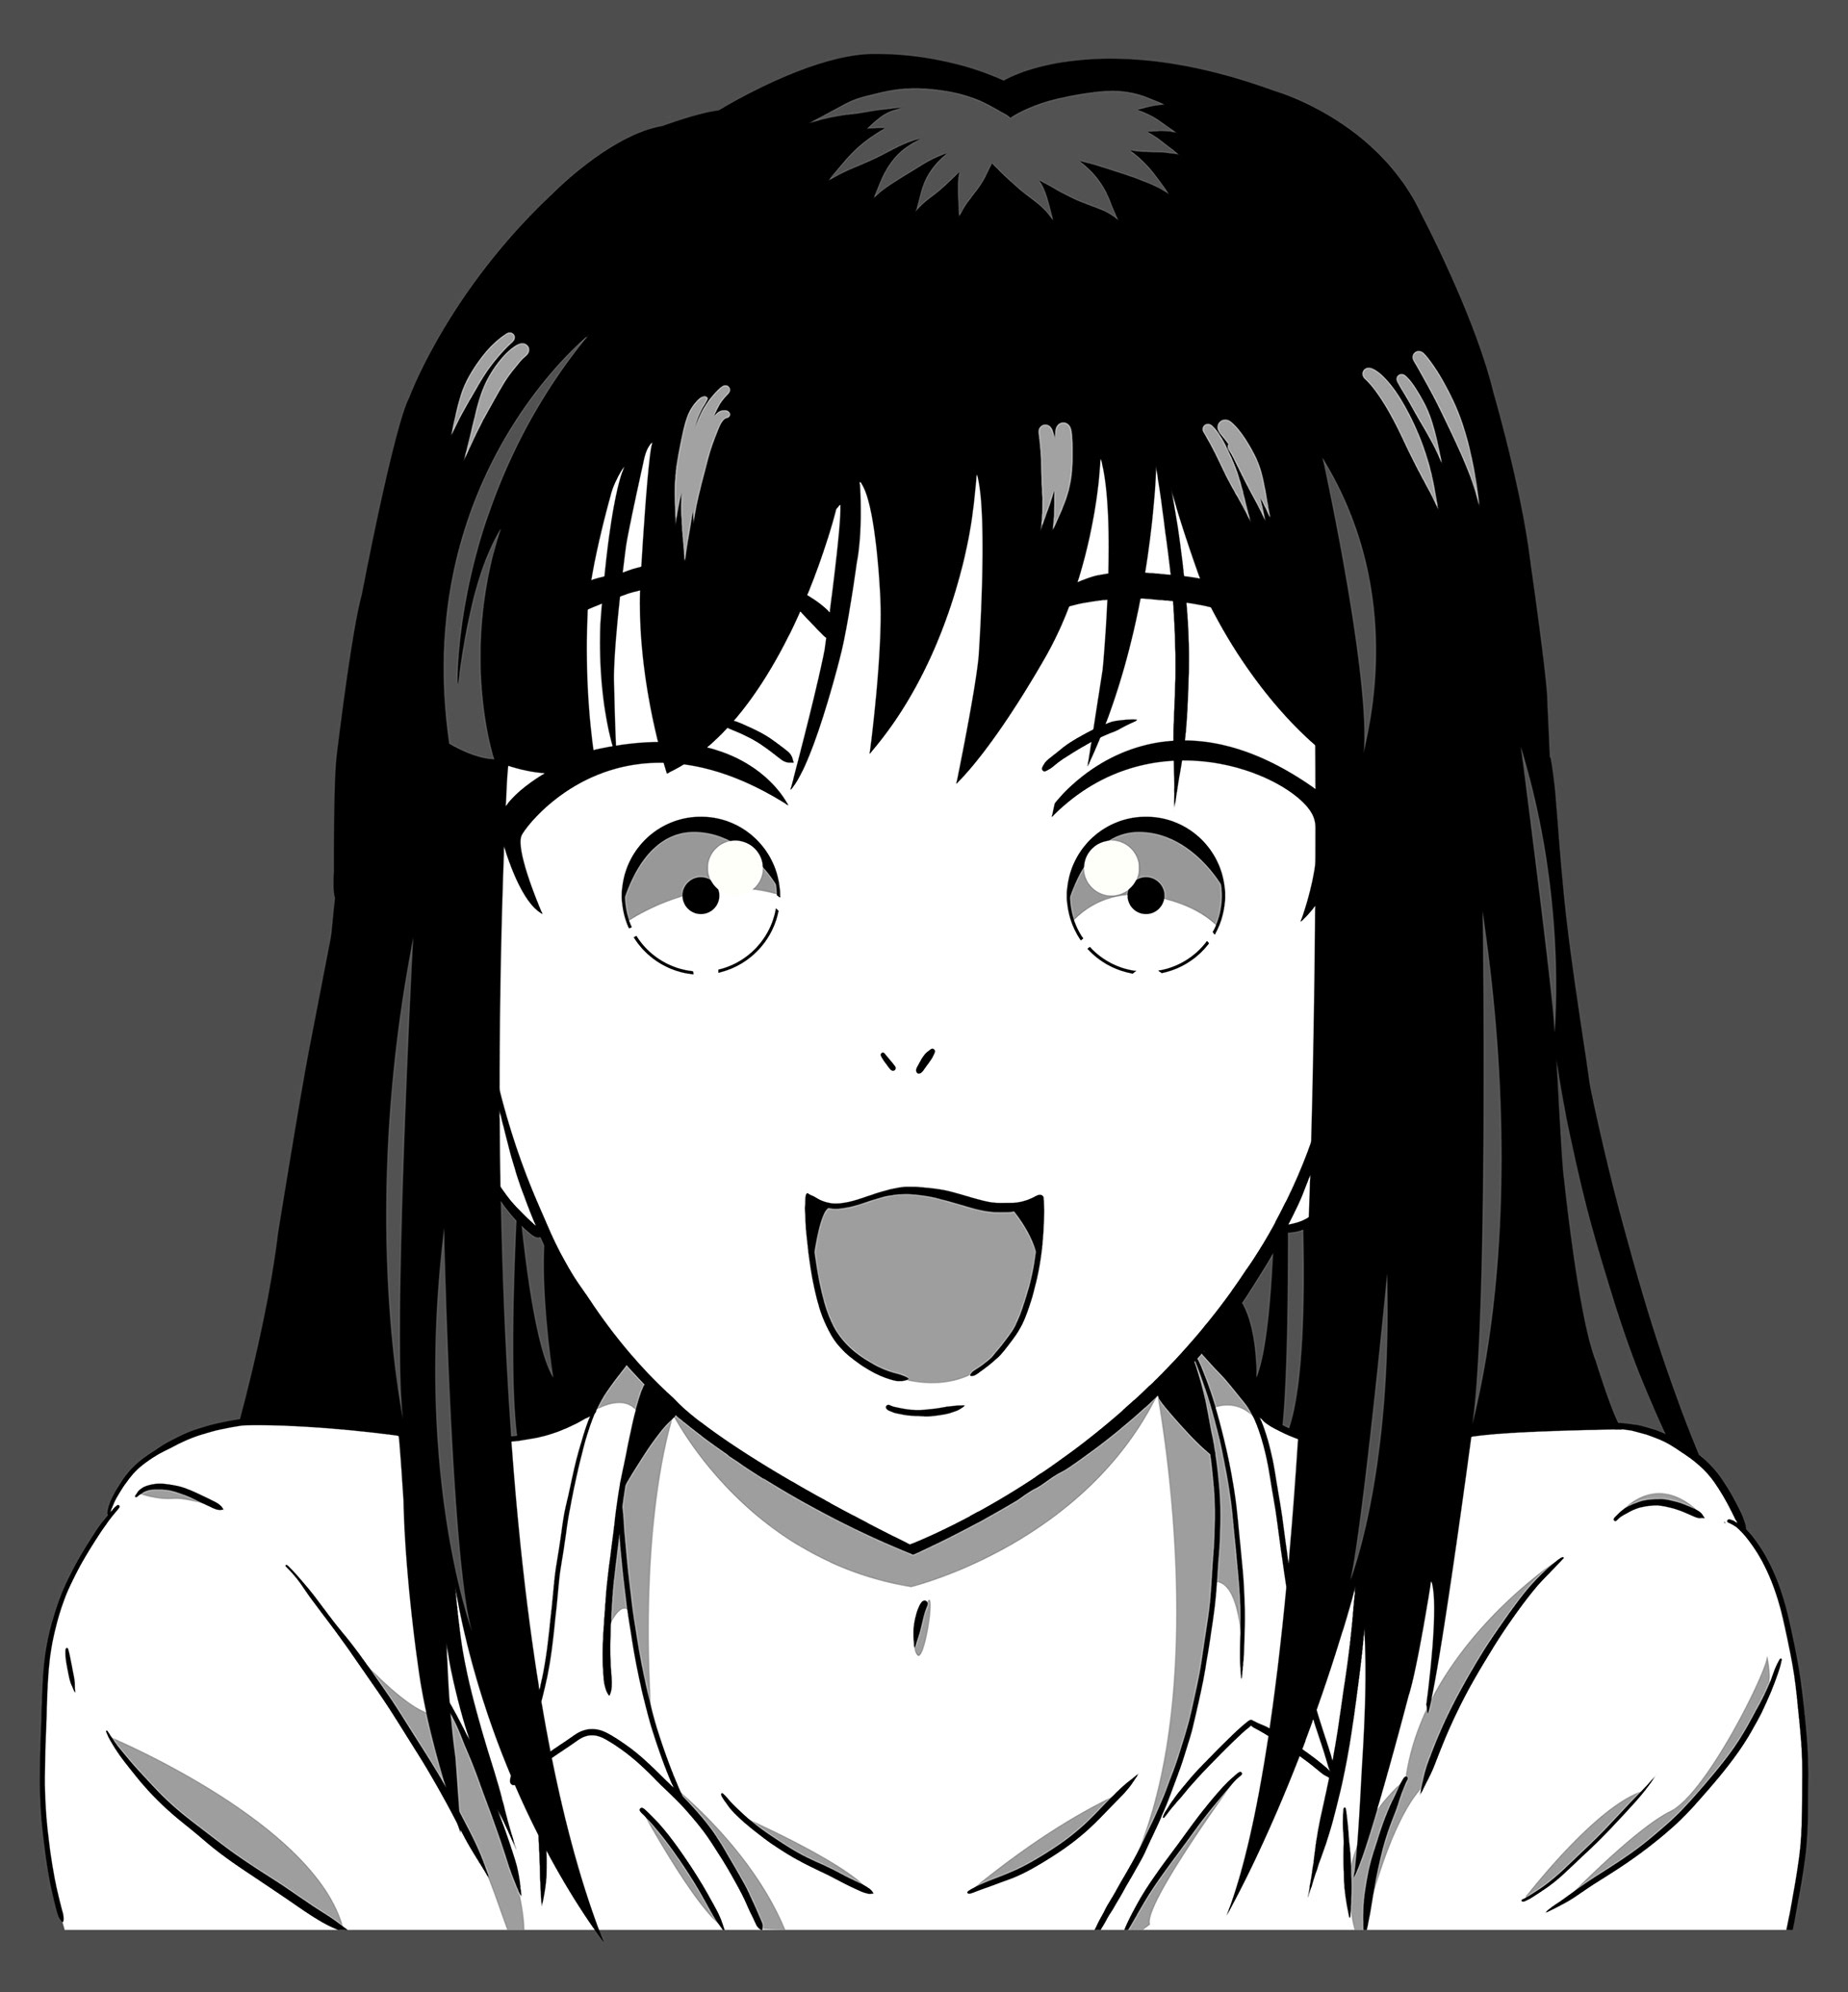 Happy Anime Girl Smile on Behance